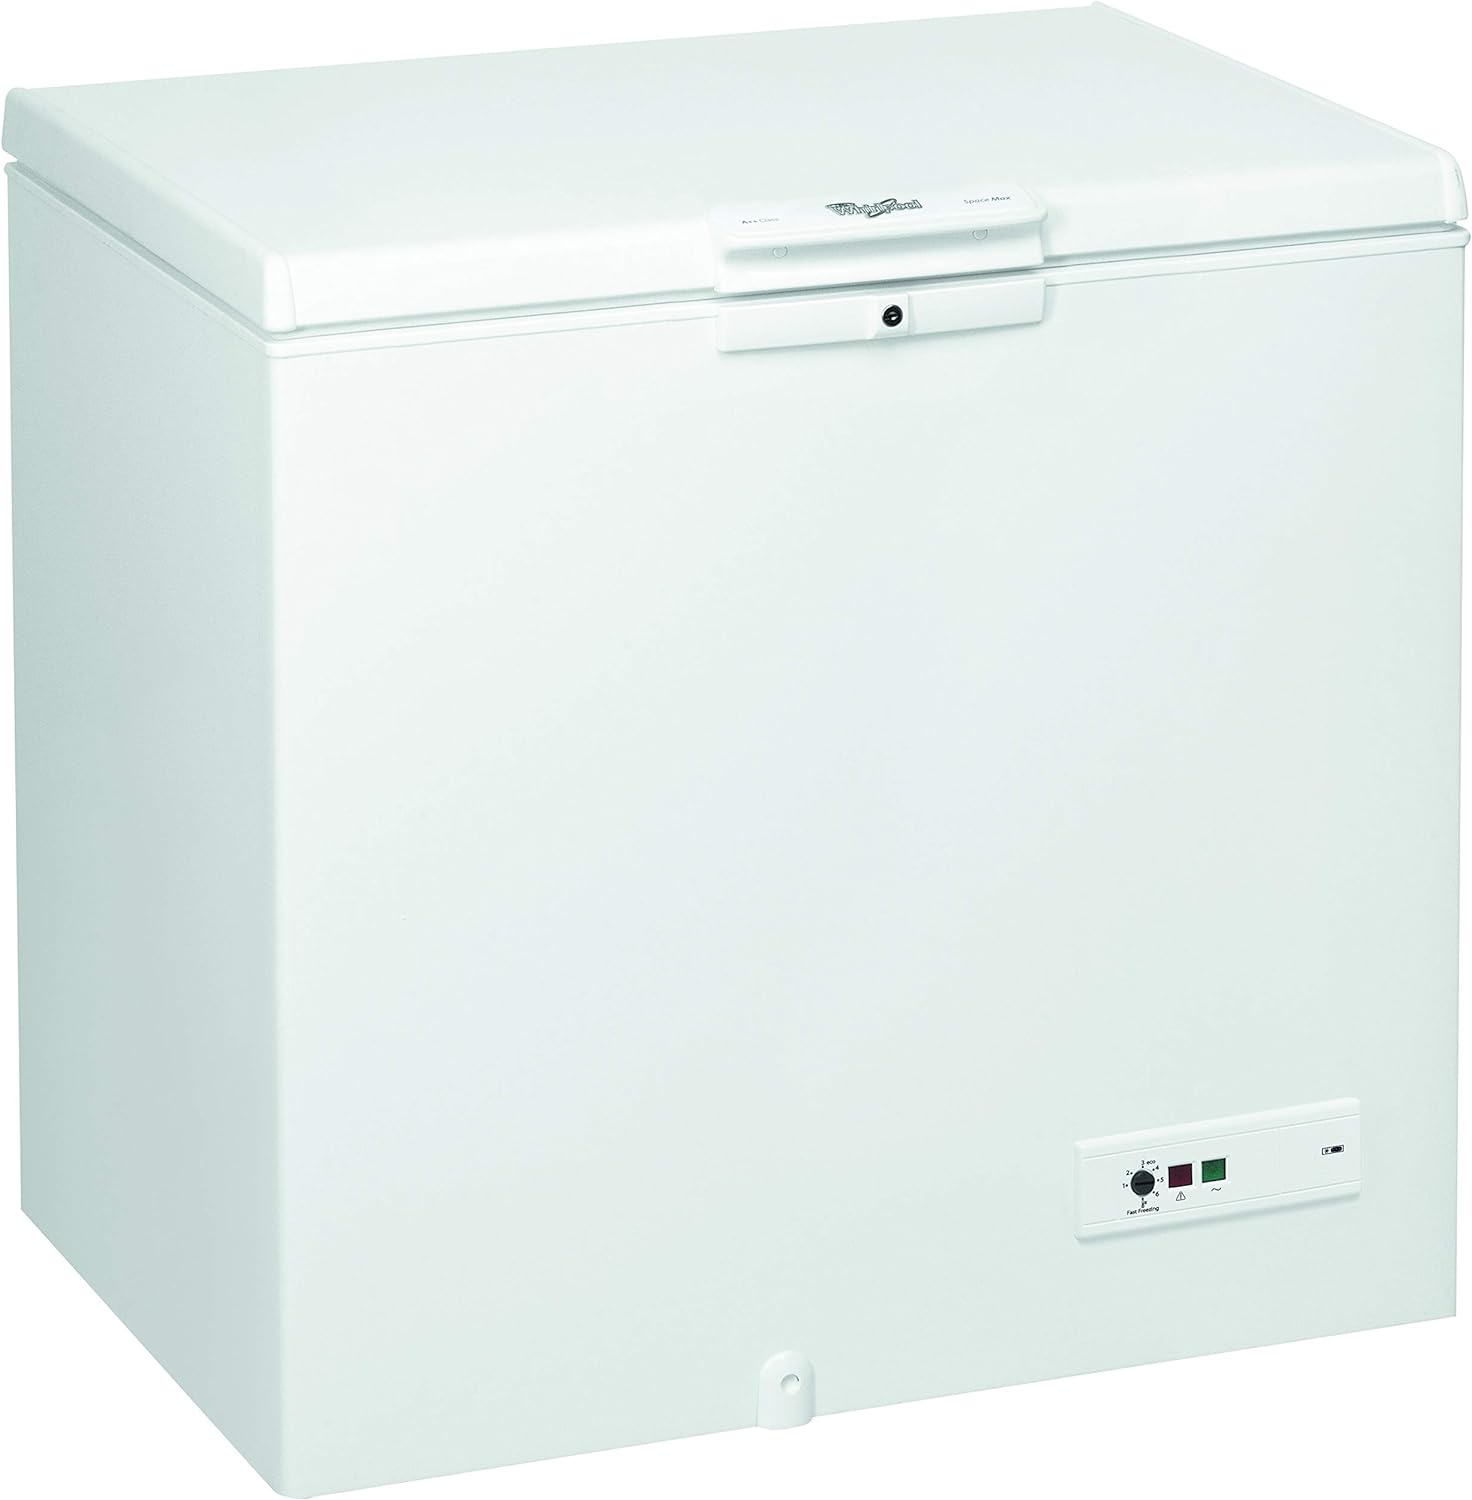 Whirlpool Freezer WHM31112 - Congelatore 2/315 litri, funzione super congelatore, illuminazione interna, classe energetica E], colore: Bianco